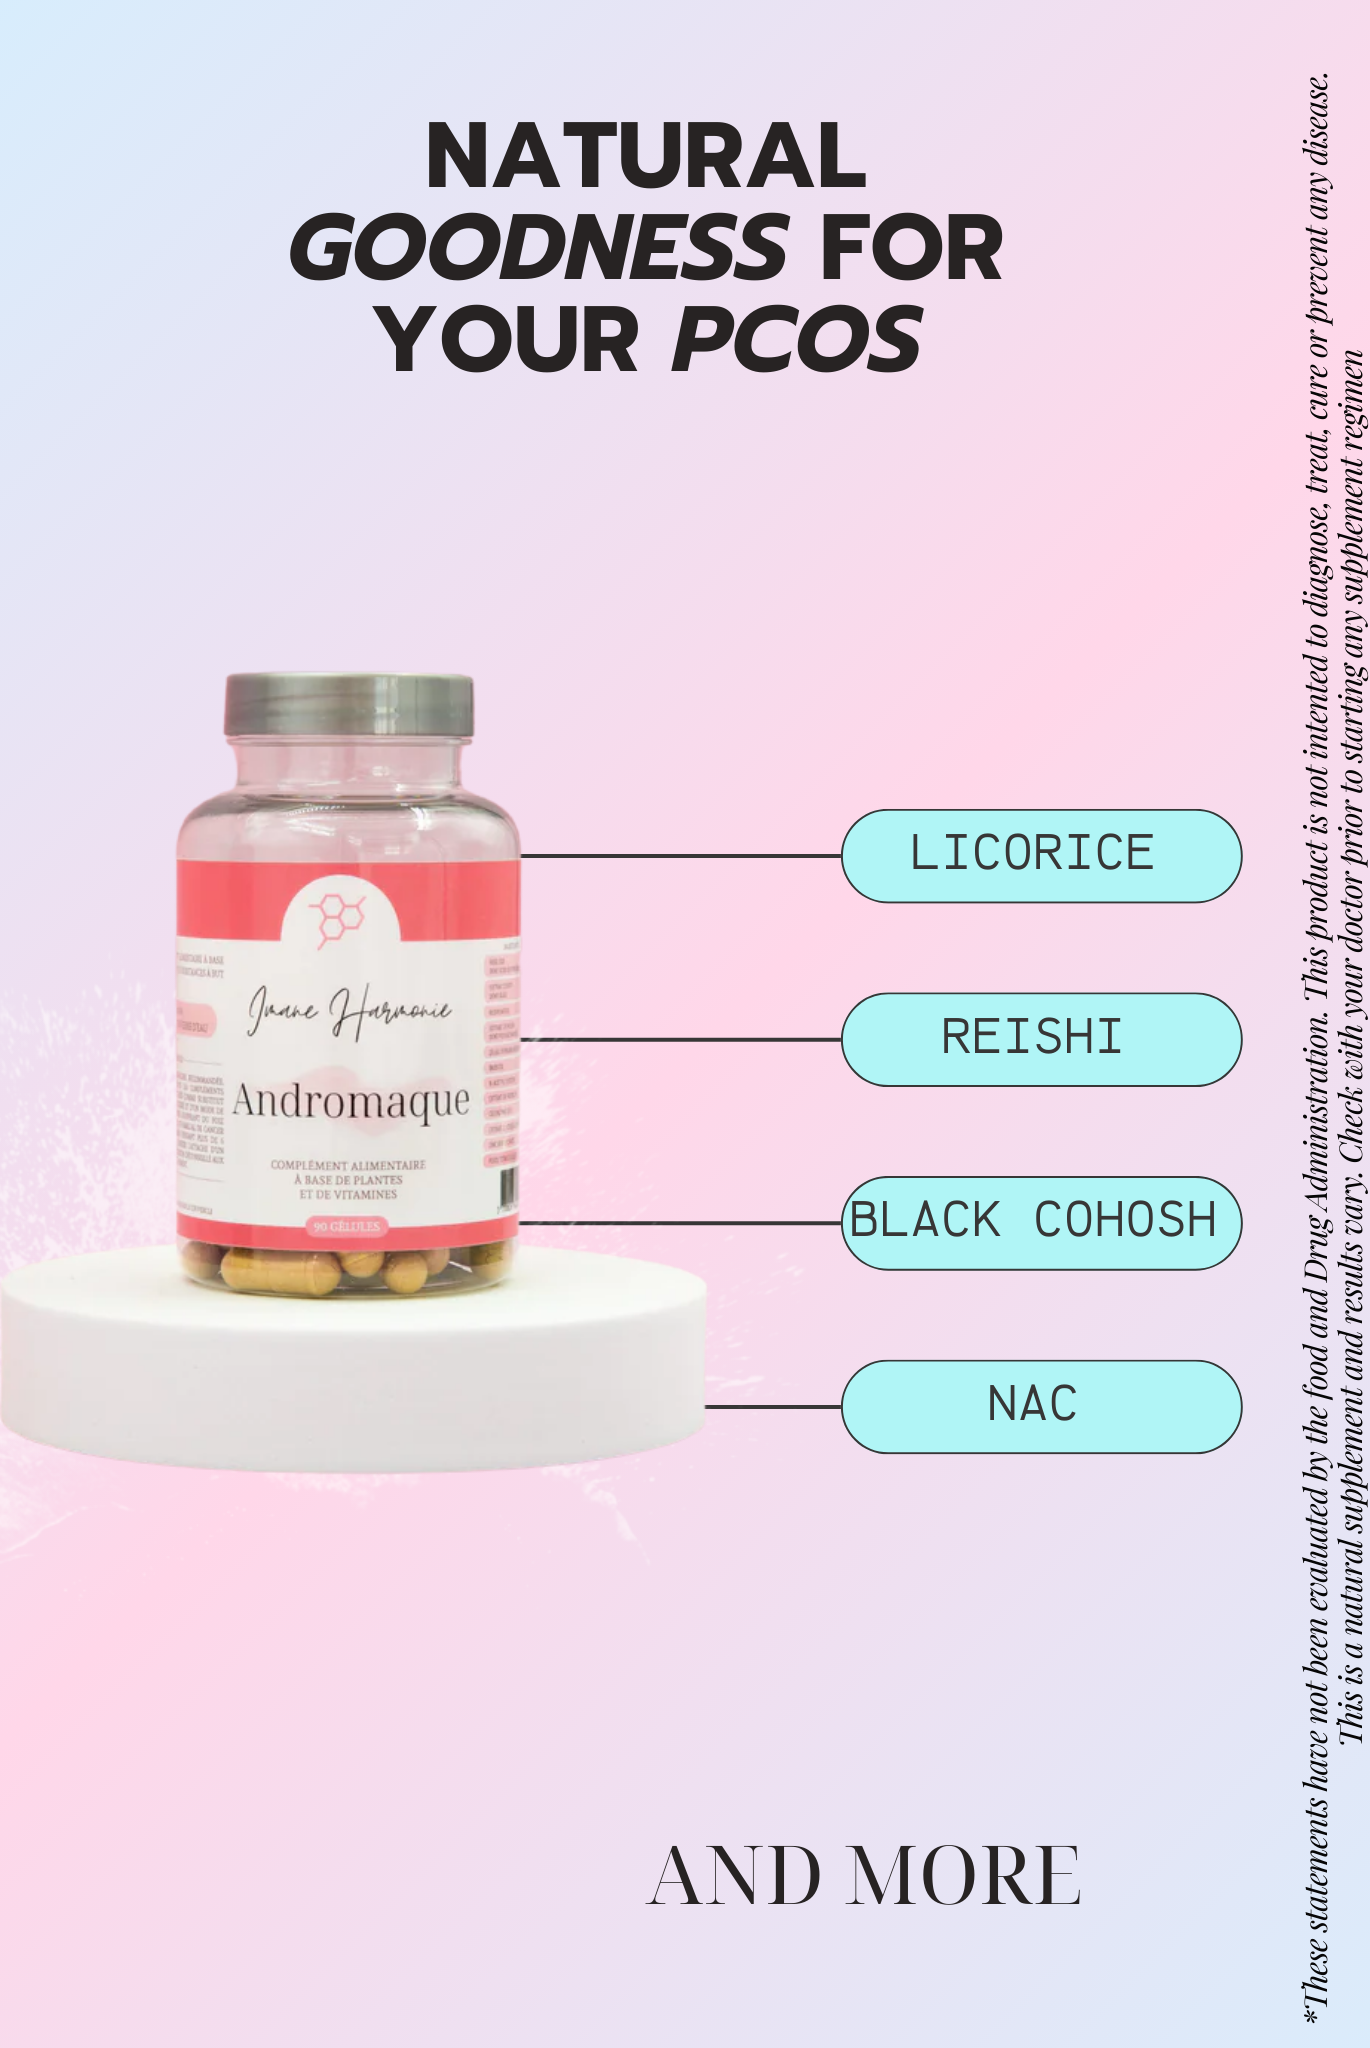 Primary supplements of Andromaque : Licorice, reishi, black cohosh, NAC 